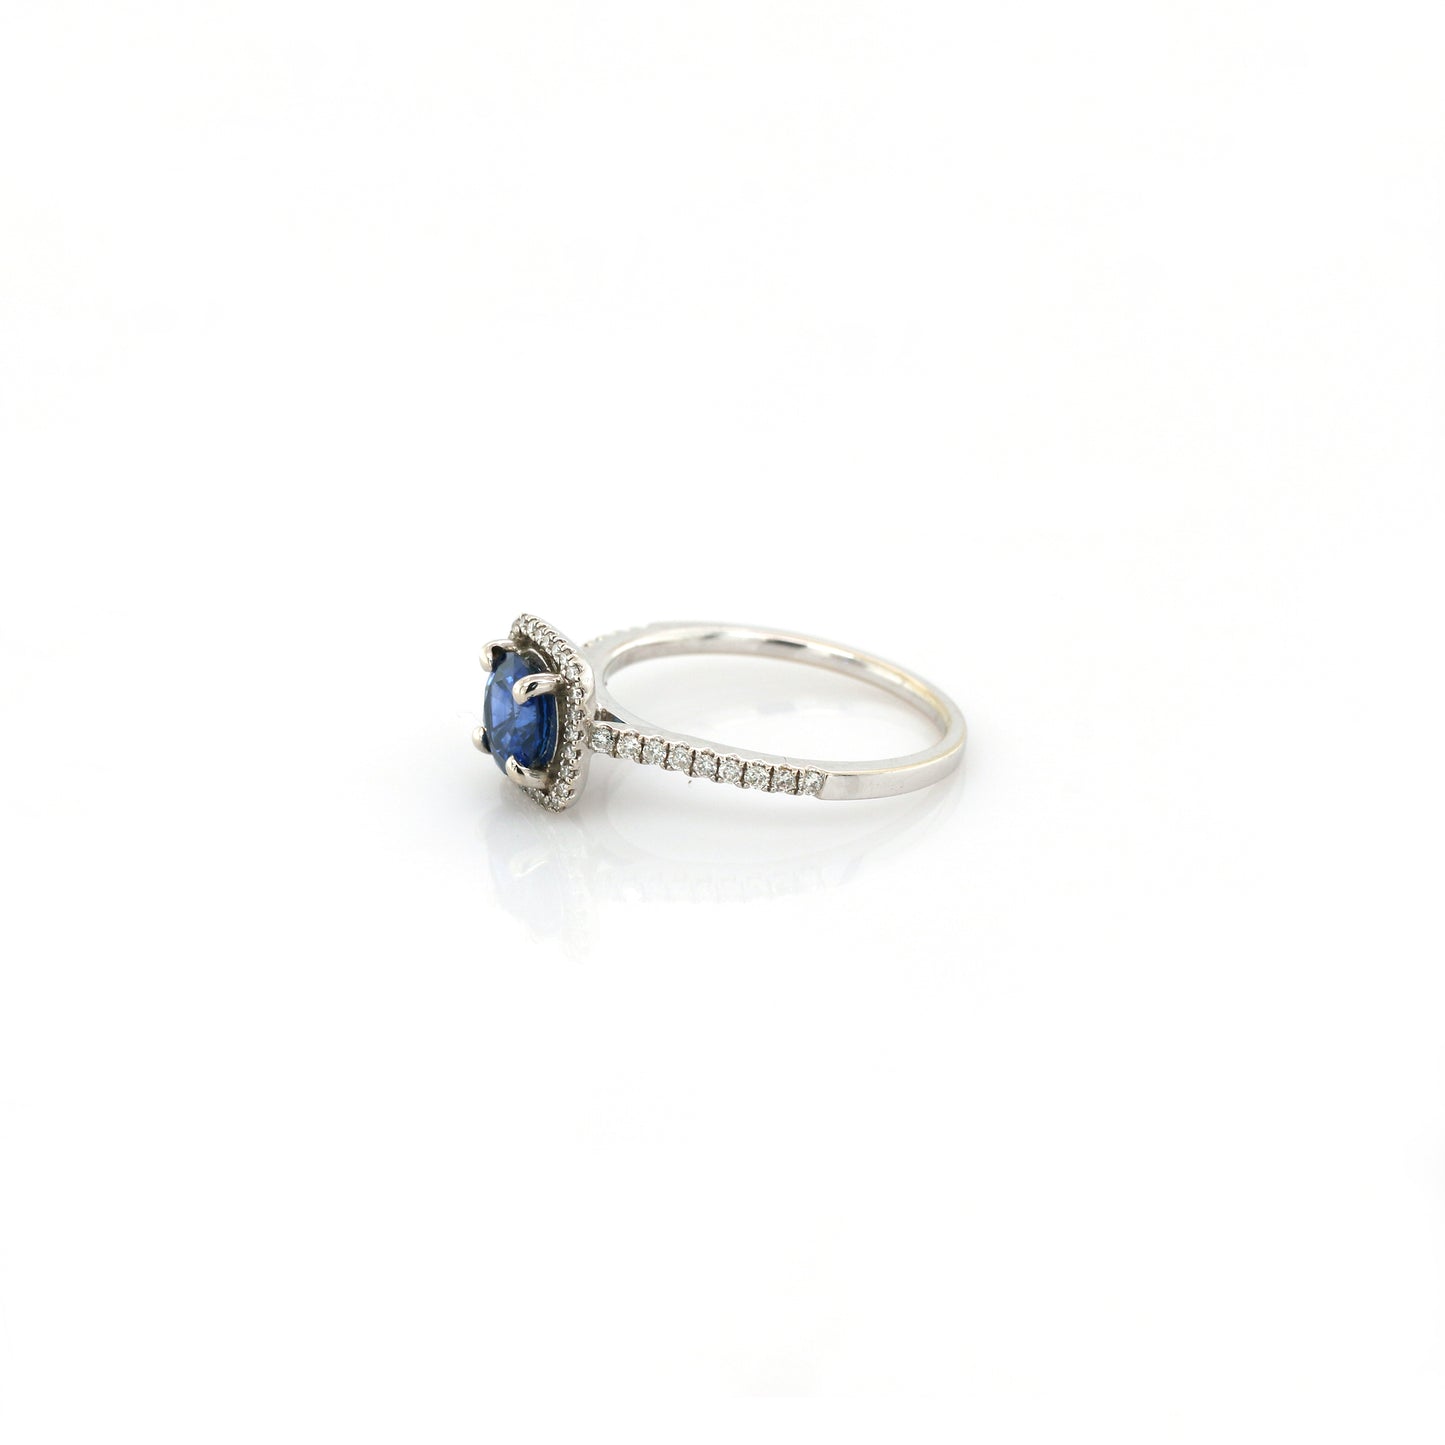 Blue Sapphire & Diamond Ring - 18K White Gold 2.60gm